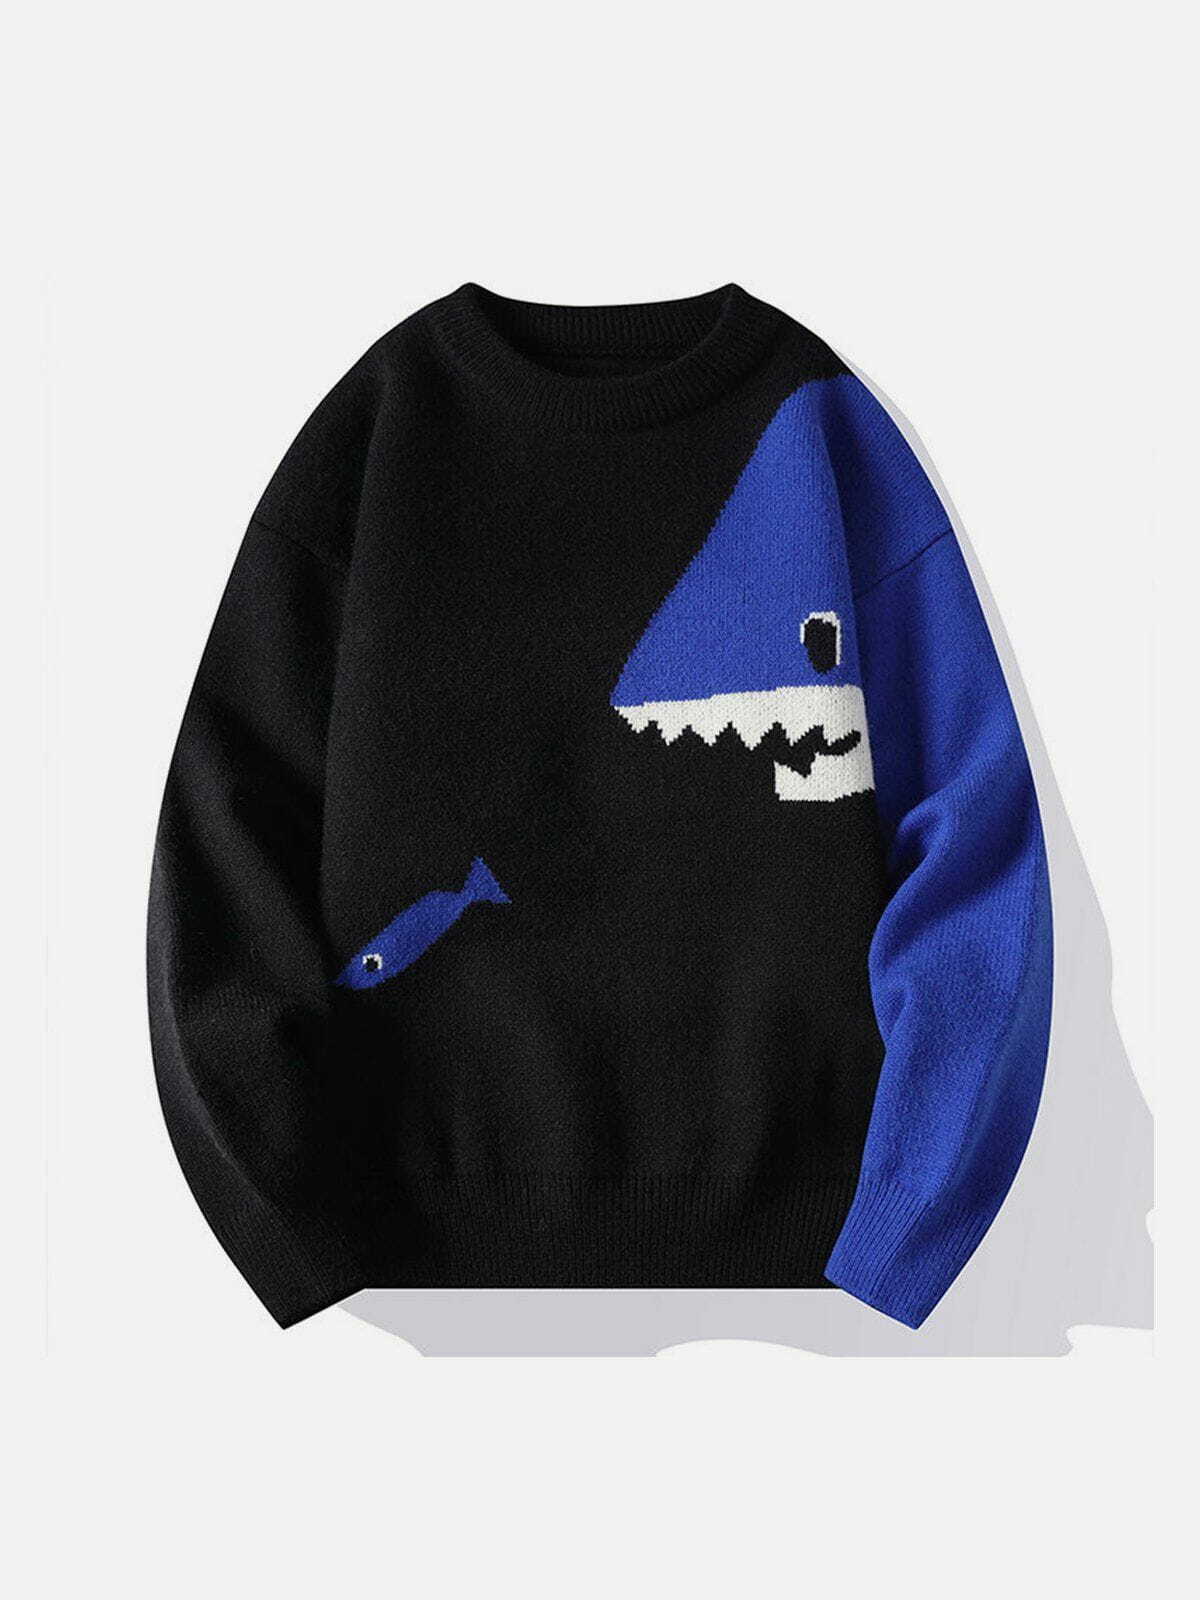 quirky cartoon shark sweater playful & edgy y2k fashion 5364